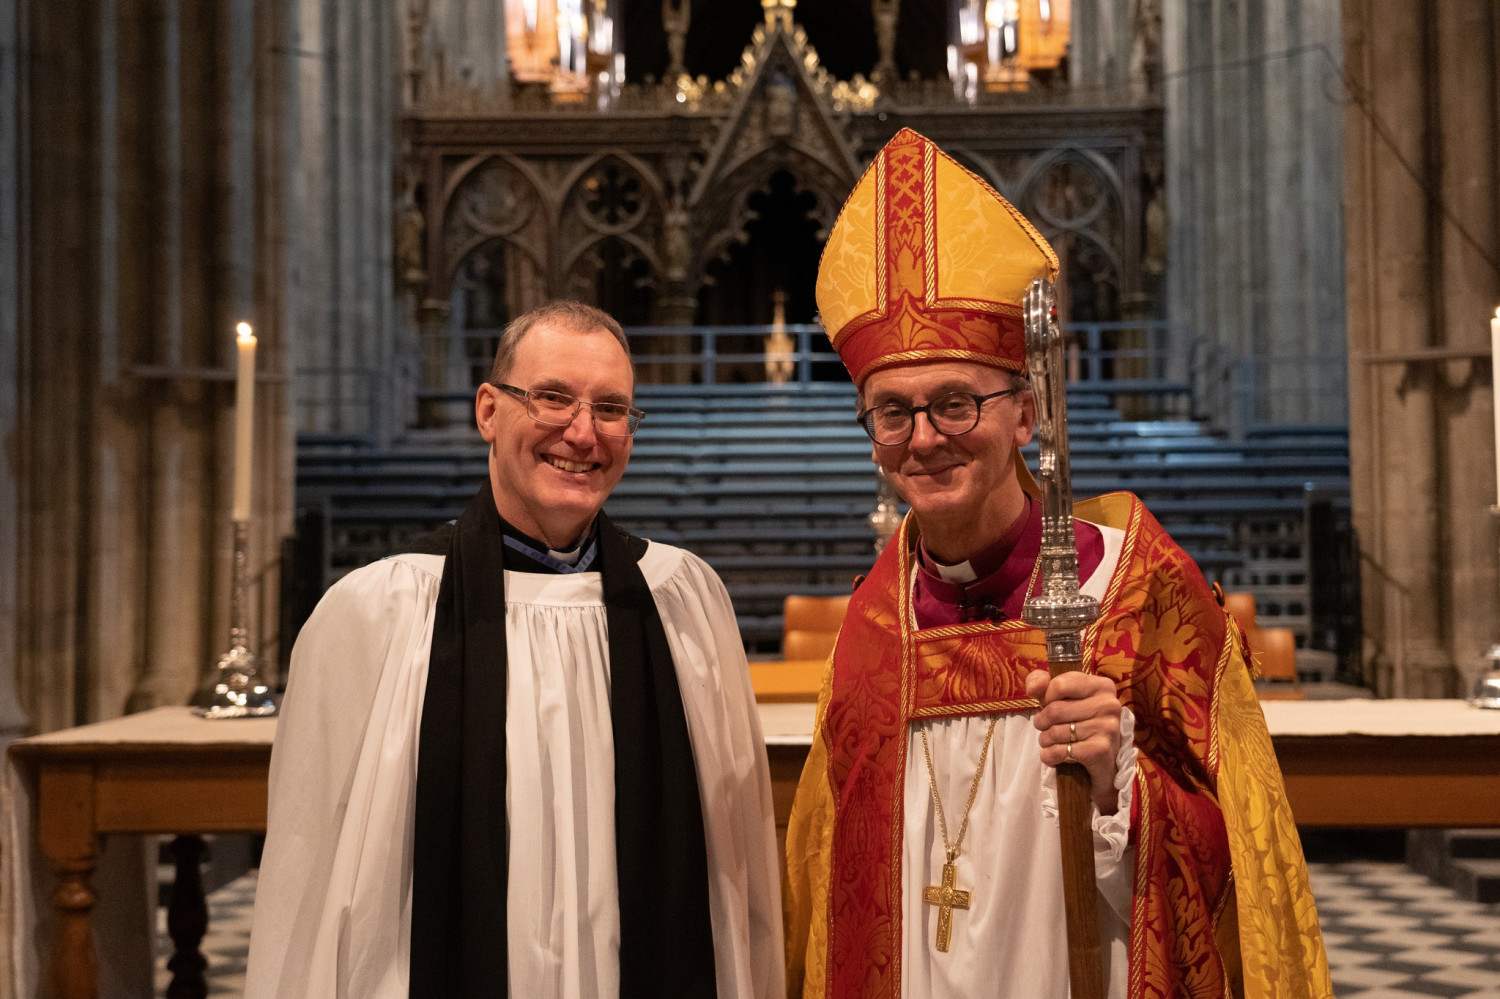 Paul Lawlor with Bishop John